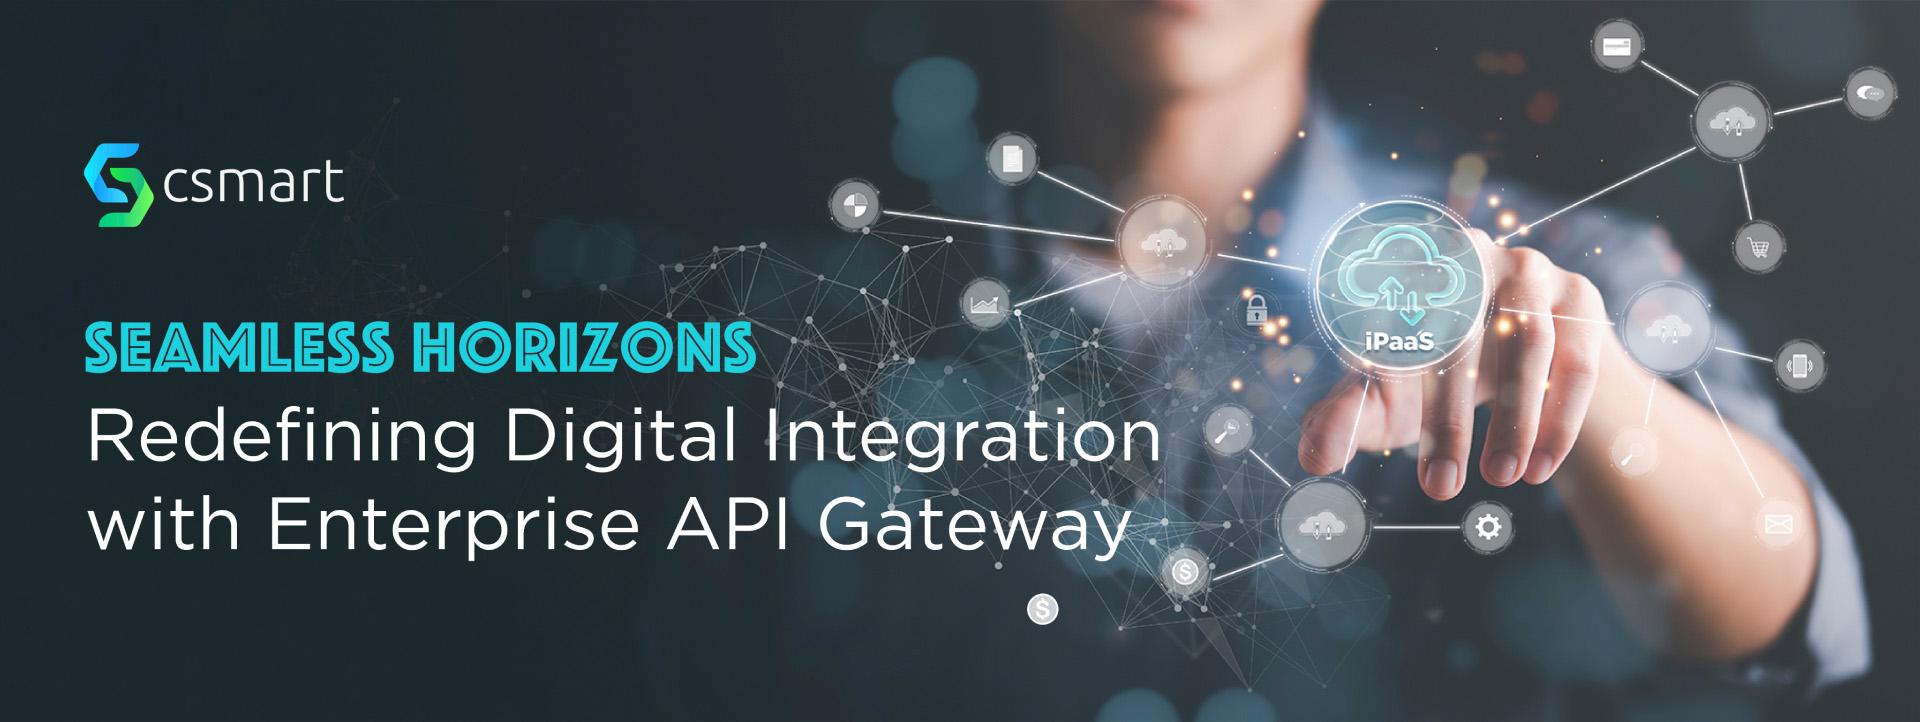 Seamless Horizons: Redefining Digital Integration with Enterprise API Gateway